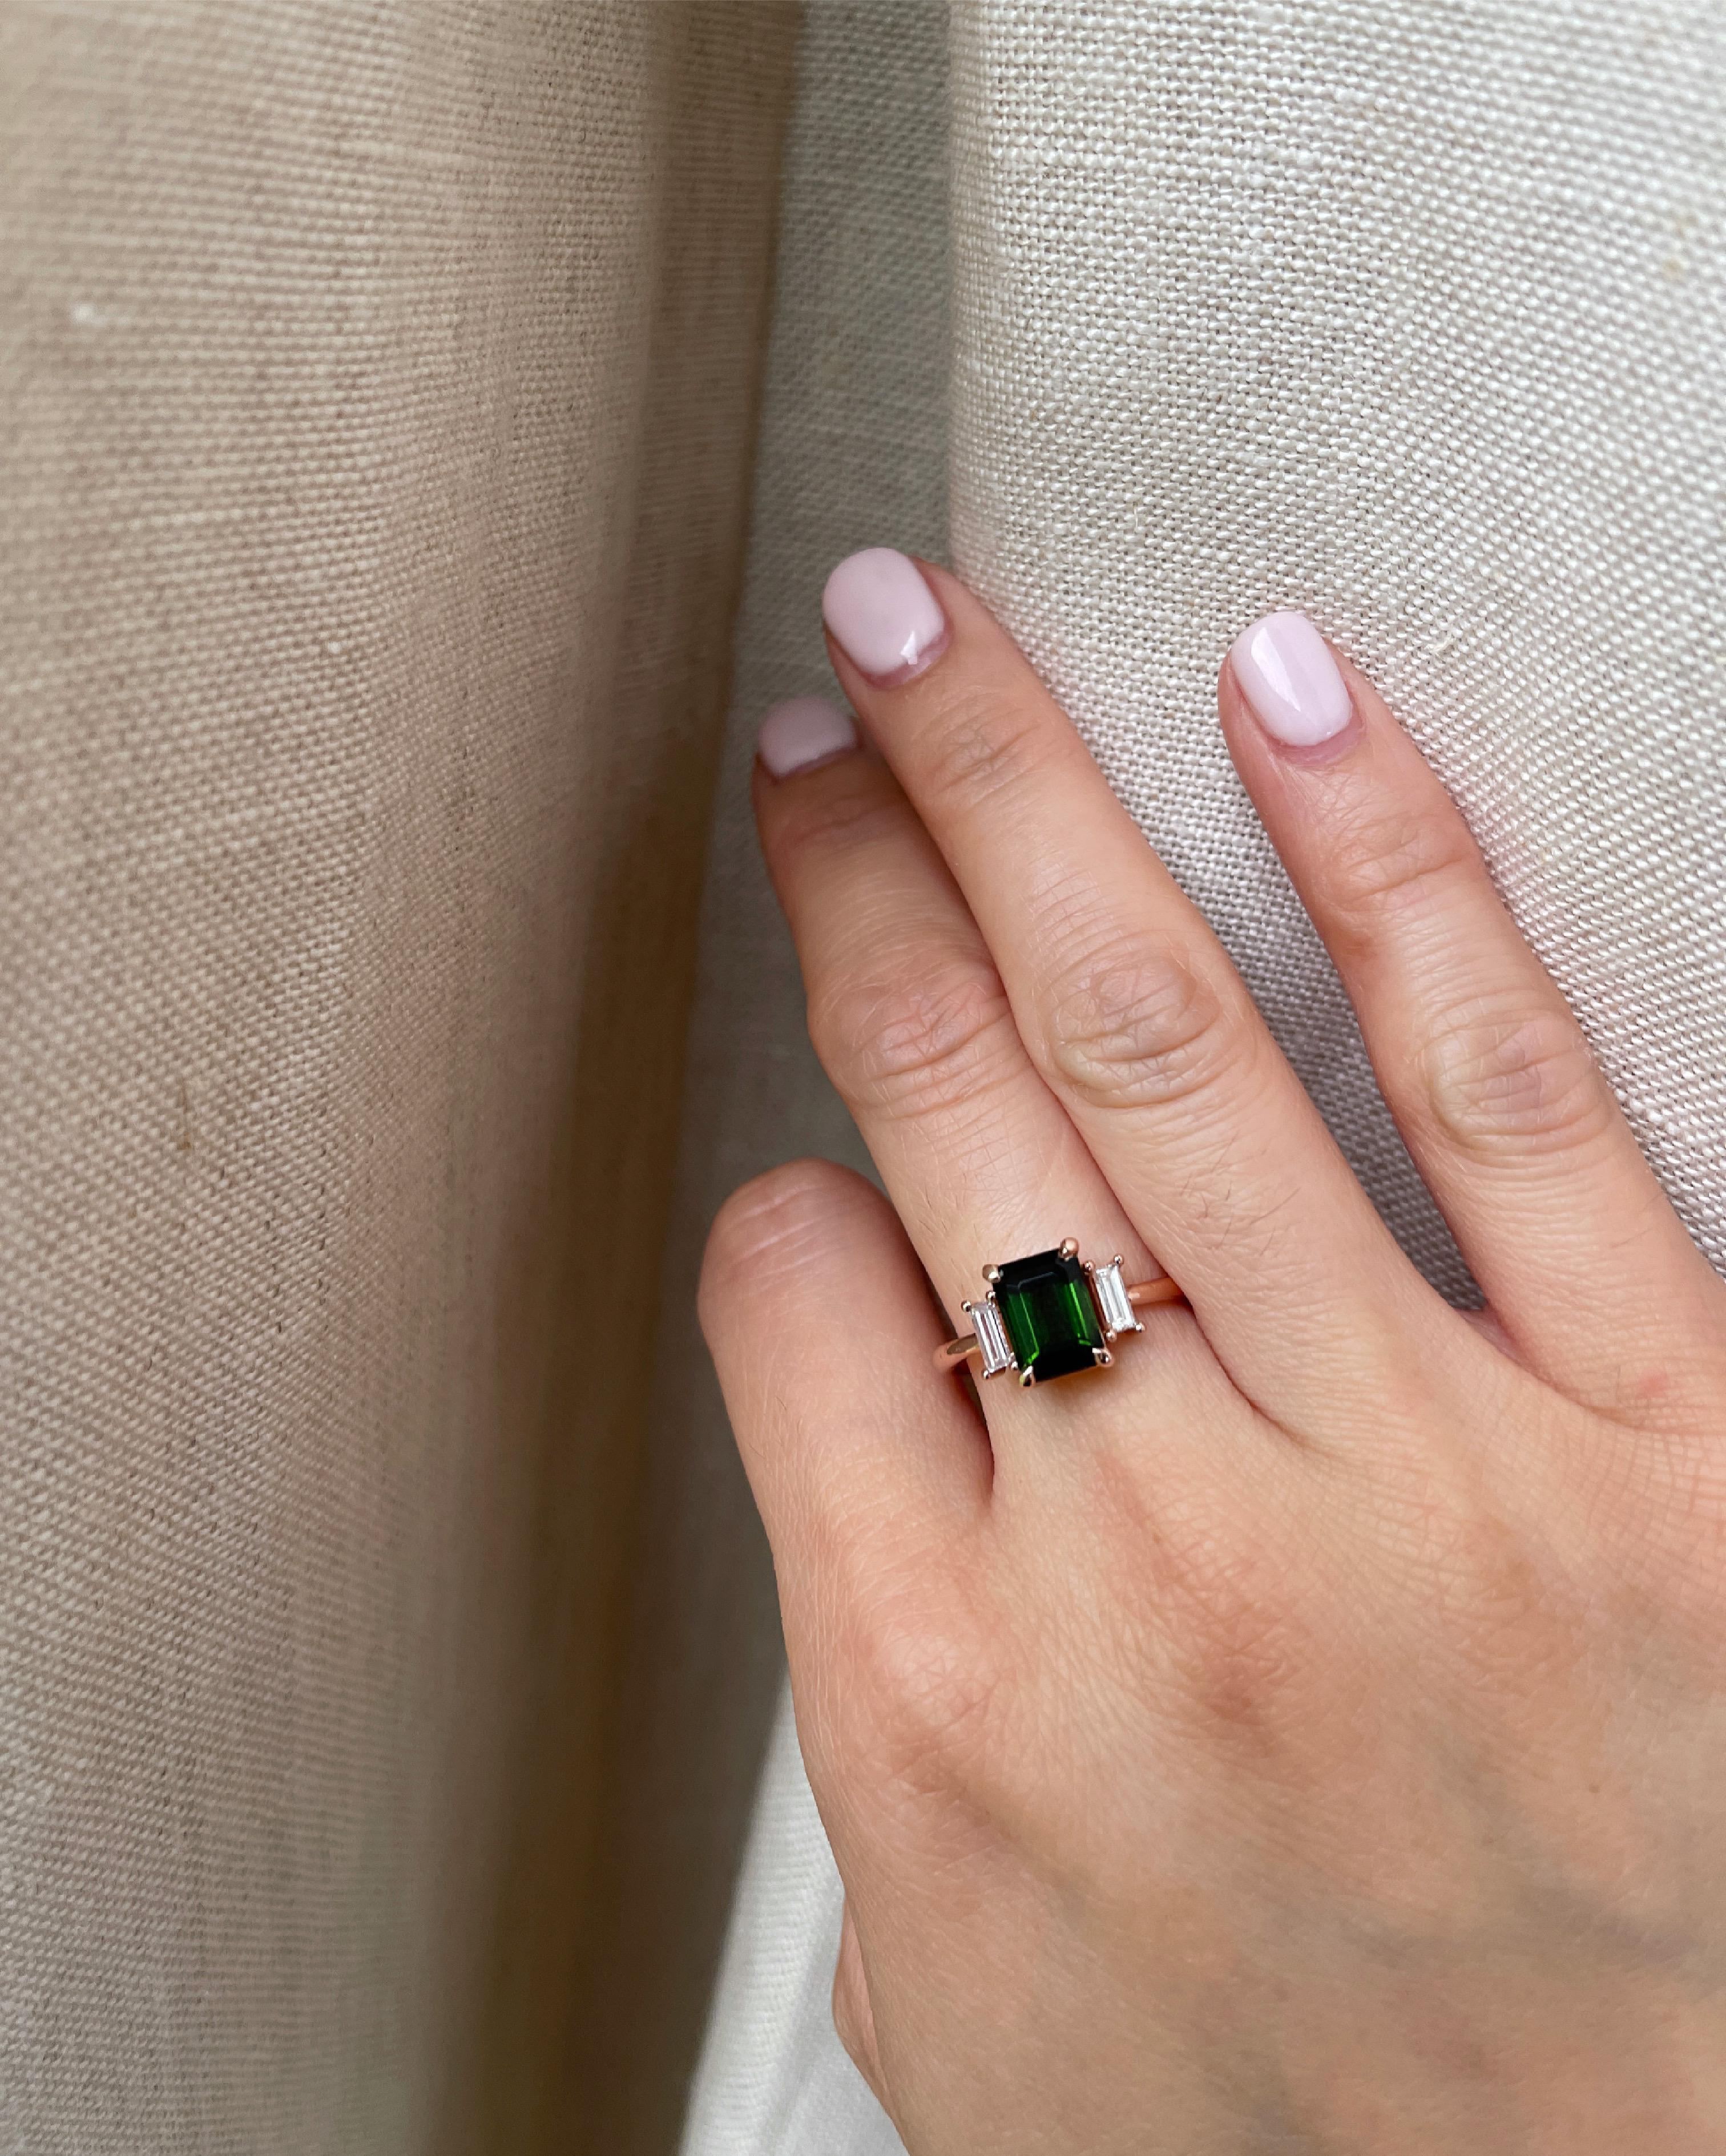 Emerald cut green tourmaline adorned with baguette diamonds
Three stone ring
Green Tourmaline Size: 8 x6 mm
Baguette Diamonds: Two 4.5 x 2 mm
Diamond Clarity: SI
Diamond Color: GHI
Diamond weight: 0.12 carat each
Total Diamond Weight: 0.25